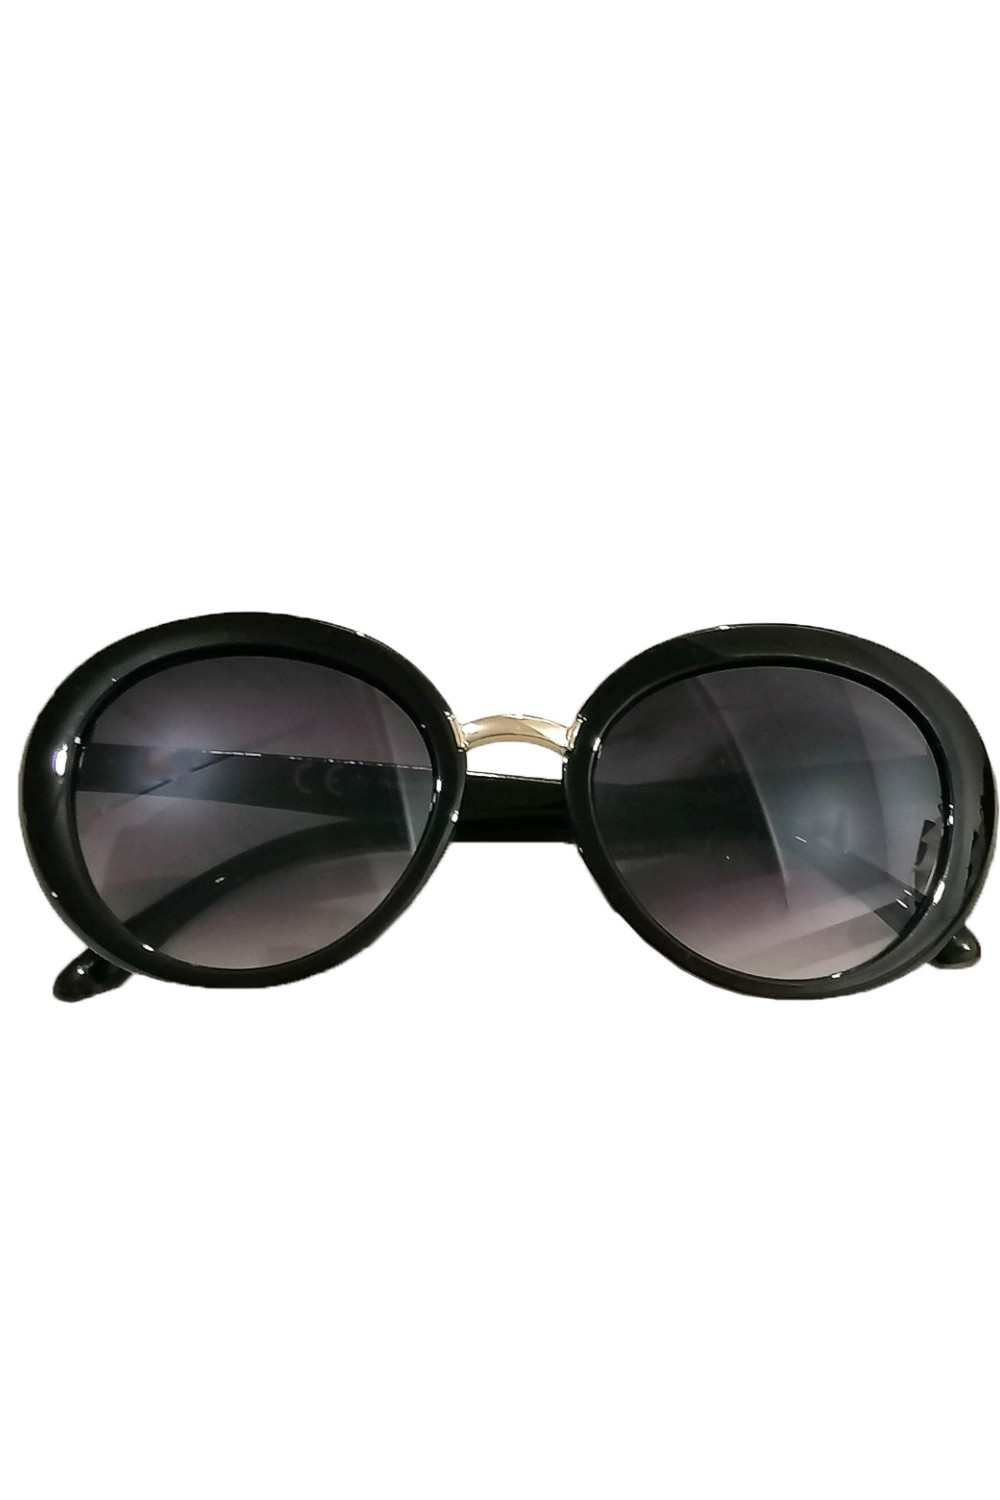 Women's Black Oval Sunglasses Premium S6051